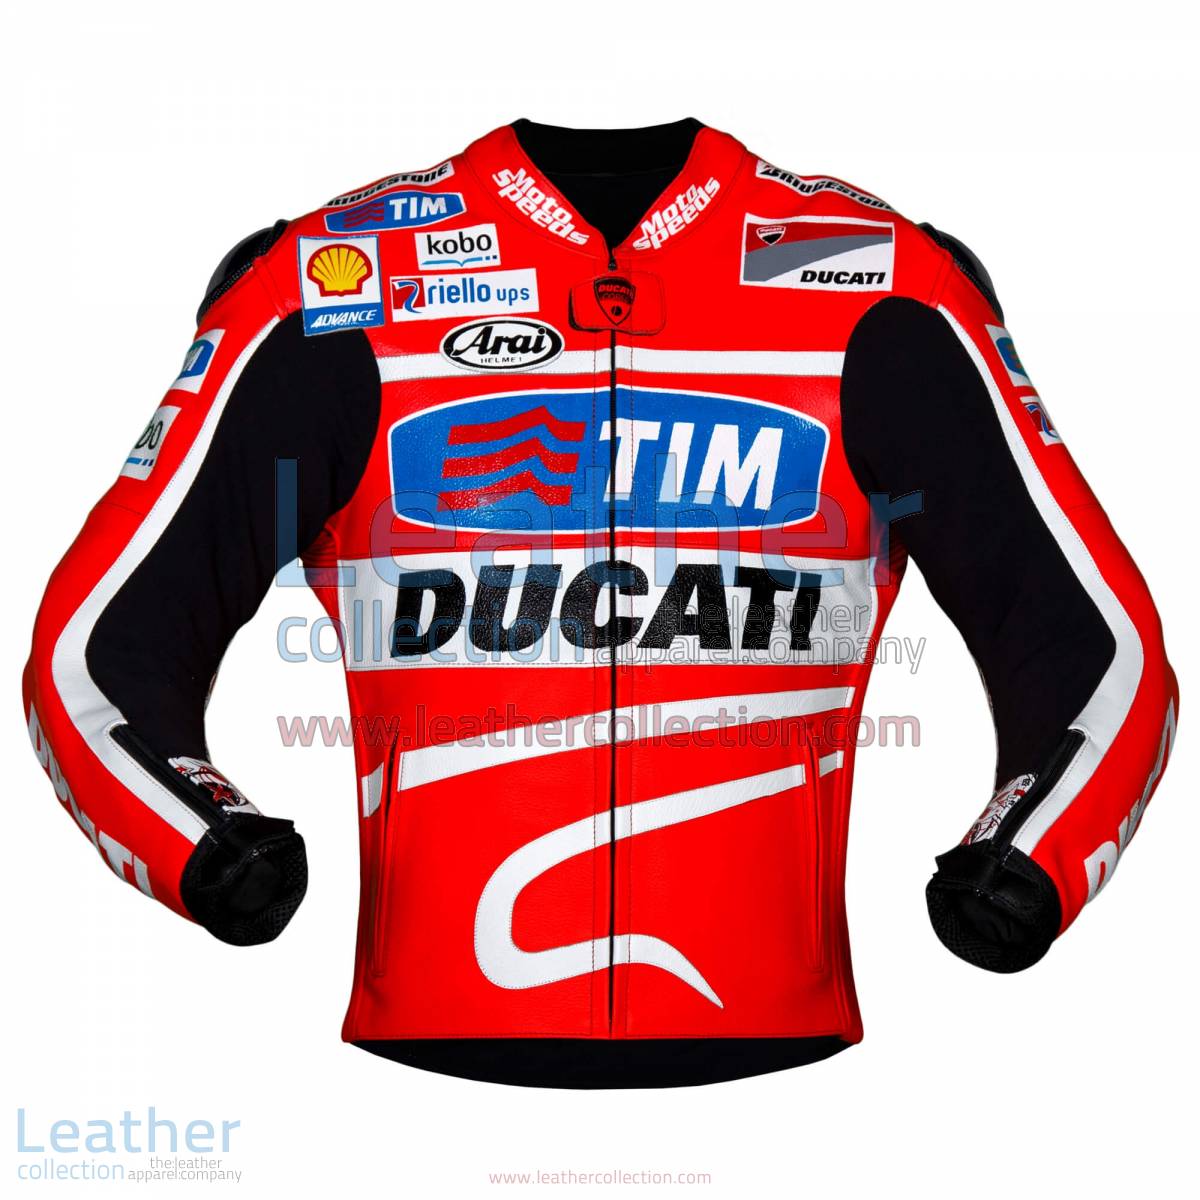 Nicky Hayden 2013 MotoGP Ducati Leather Jacket | Ducati Leather jacket,Nicky Hayden jacket